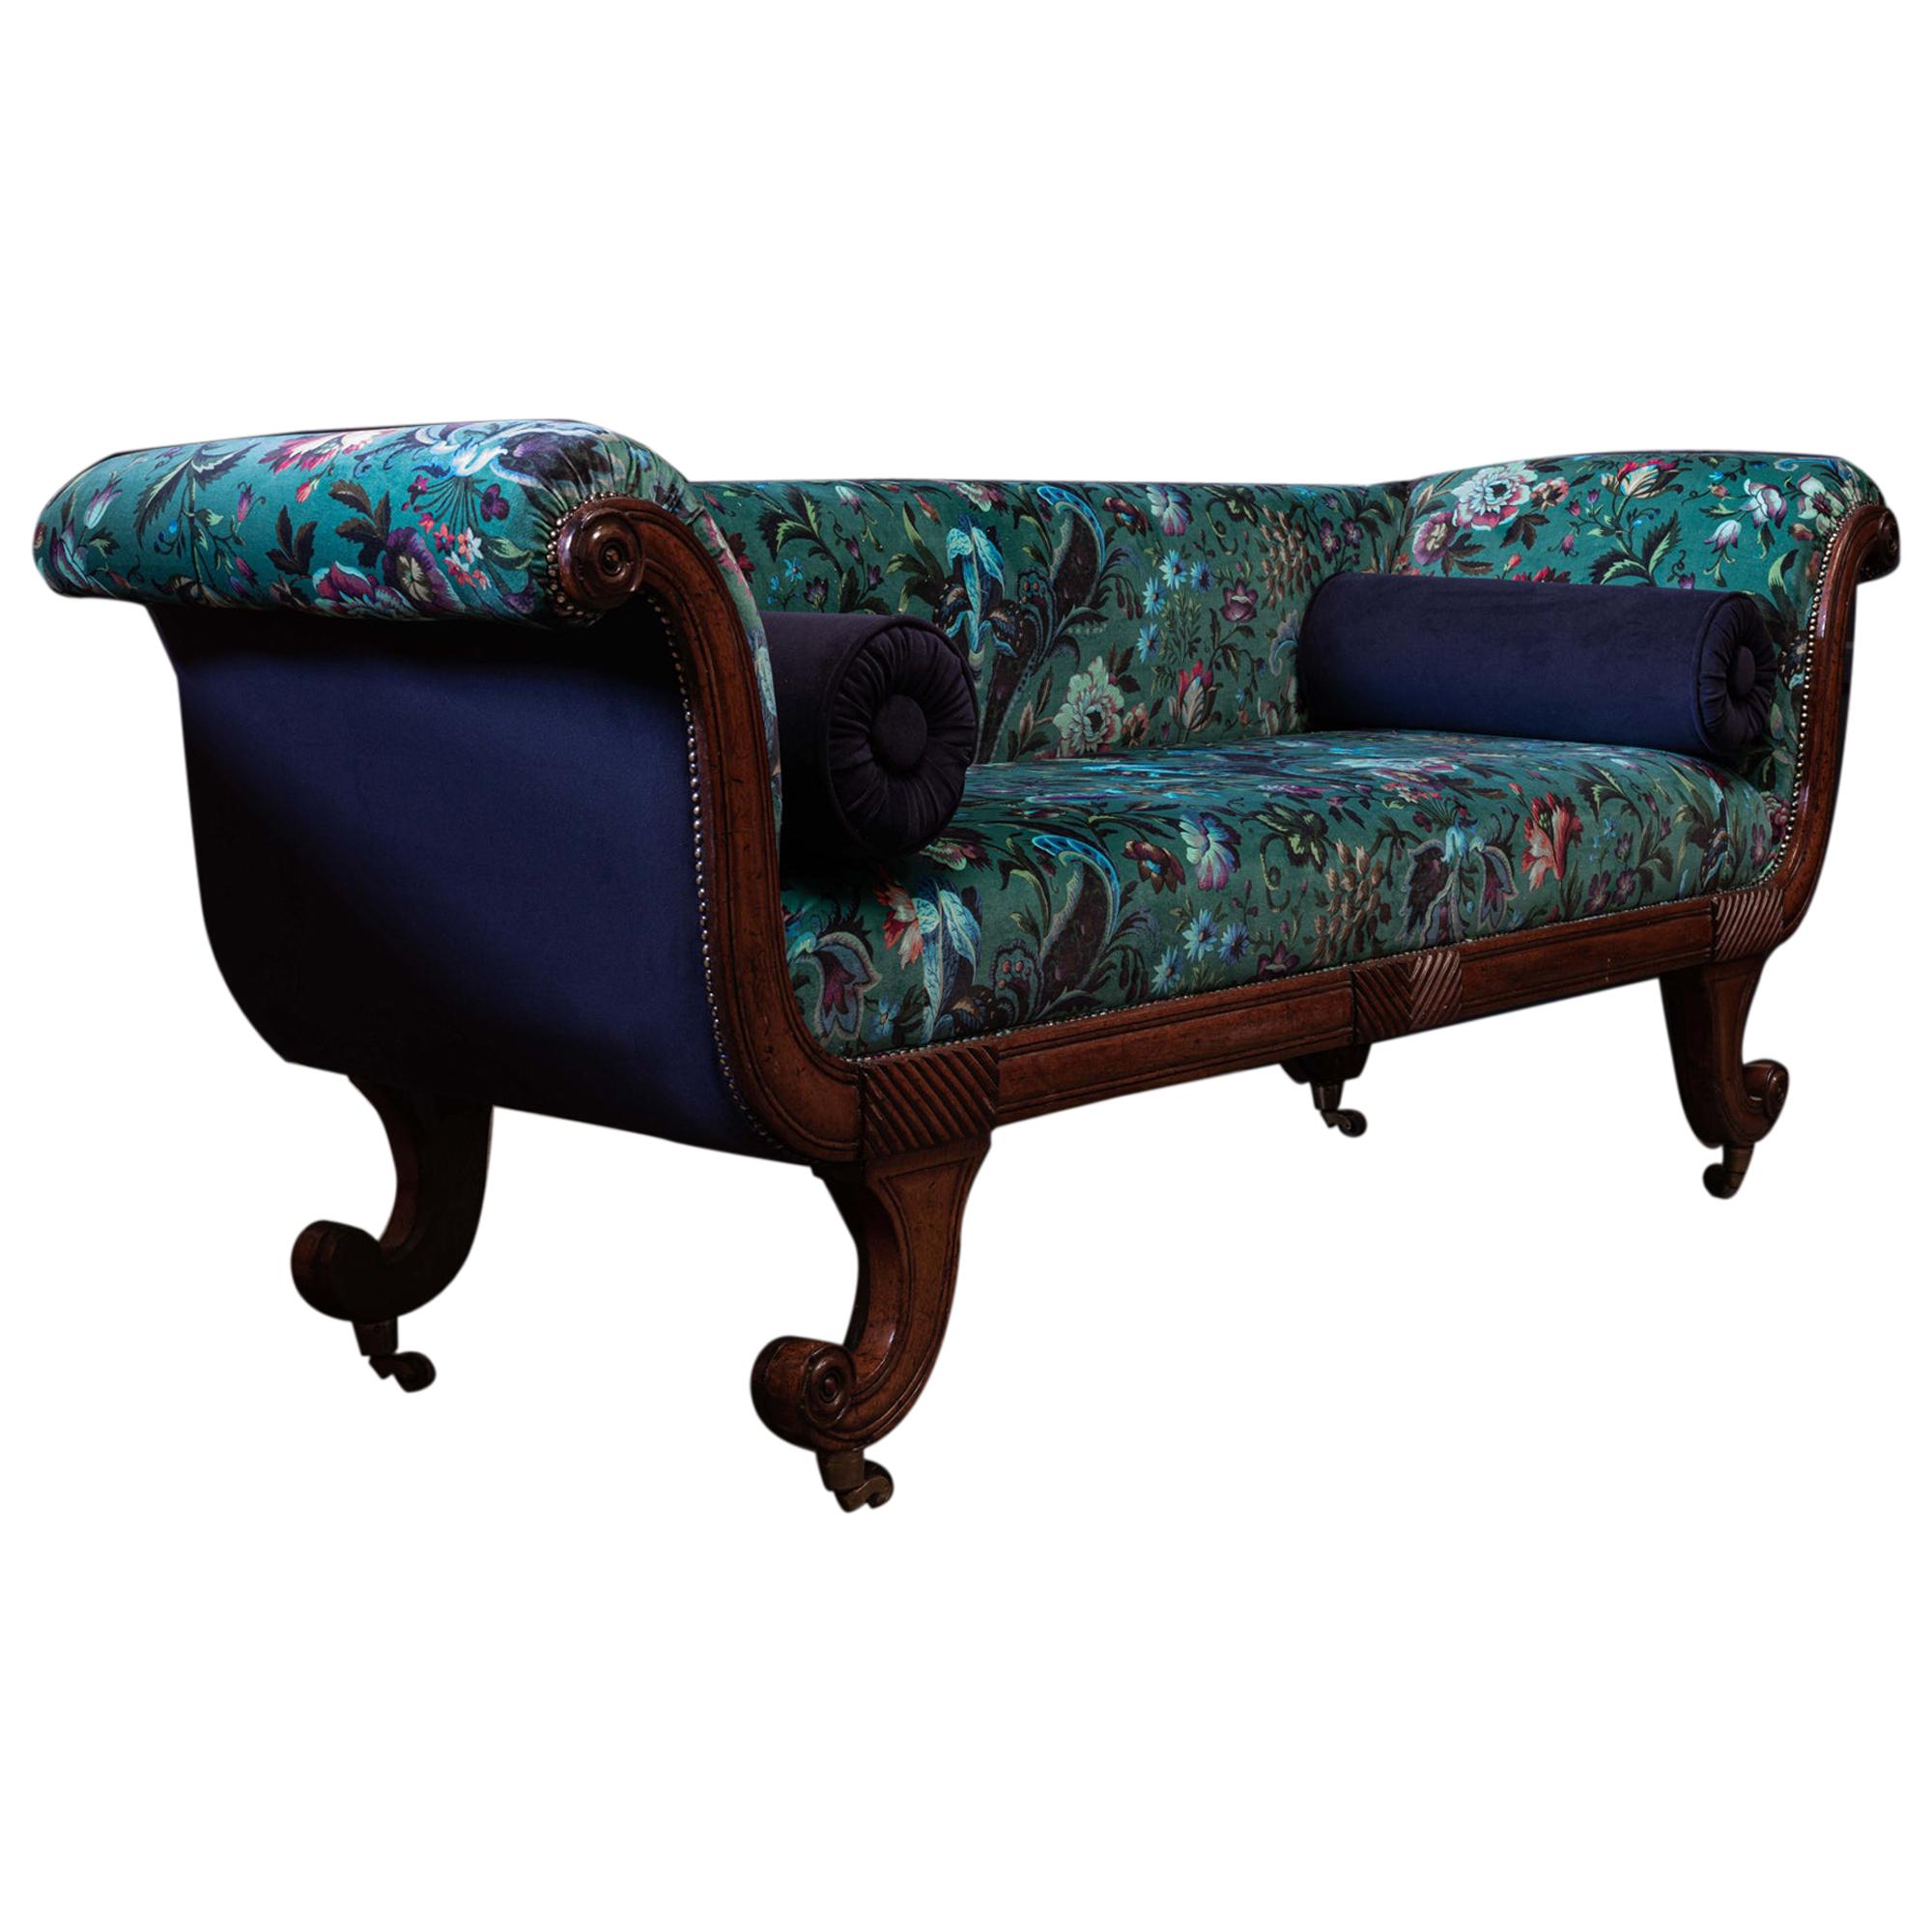 English Regency Mahogany Scroll End Sofa, Reupholstered.